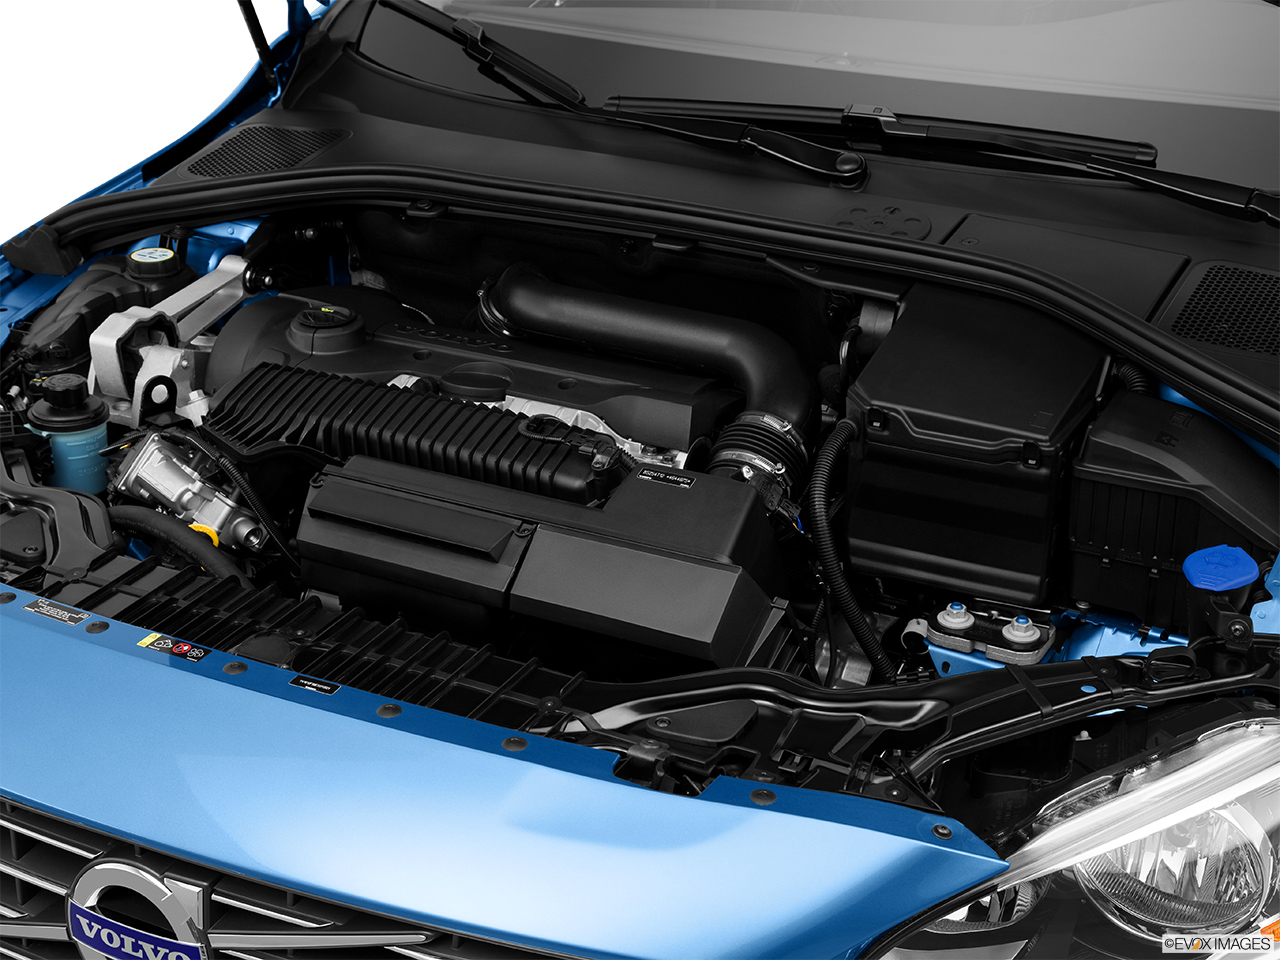 2014 Volvo S60 T5 FWD Premier Plus Engine. 